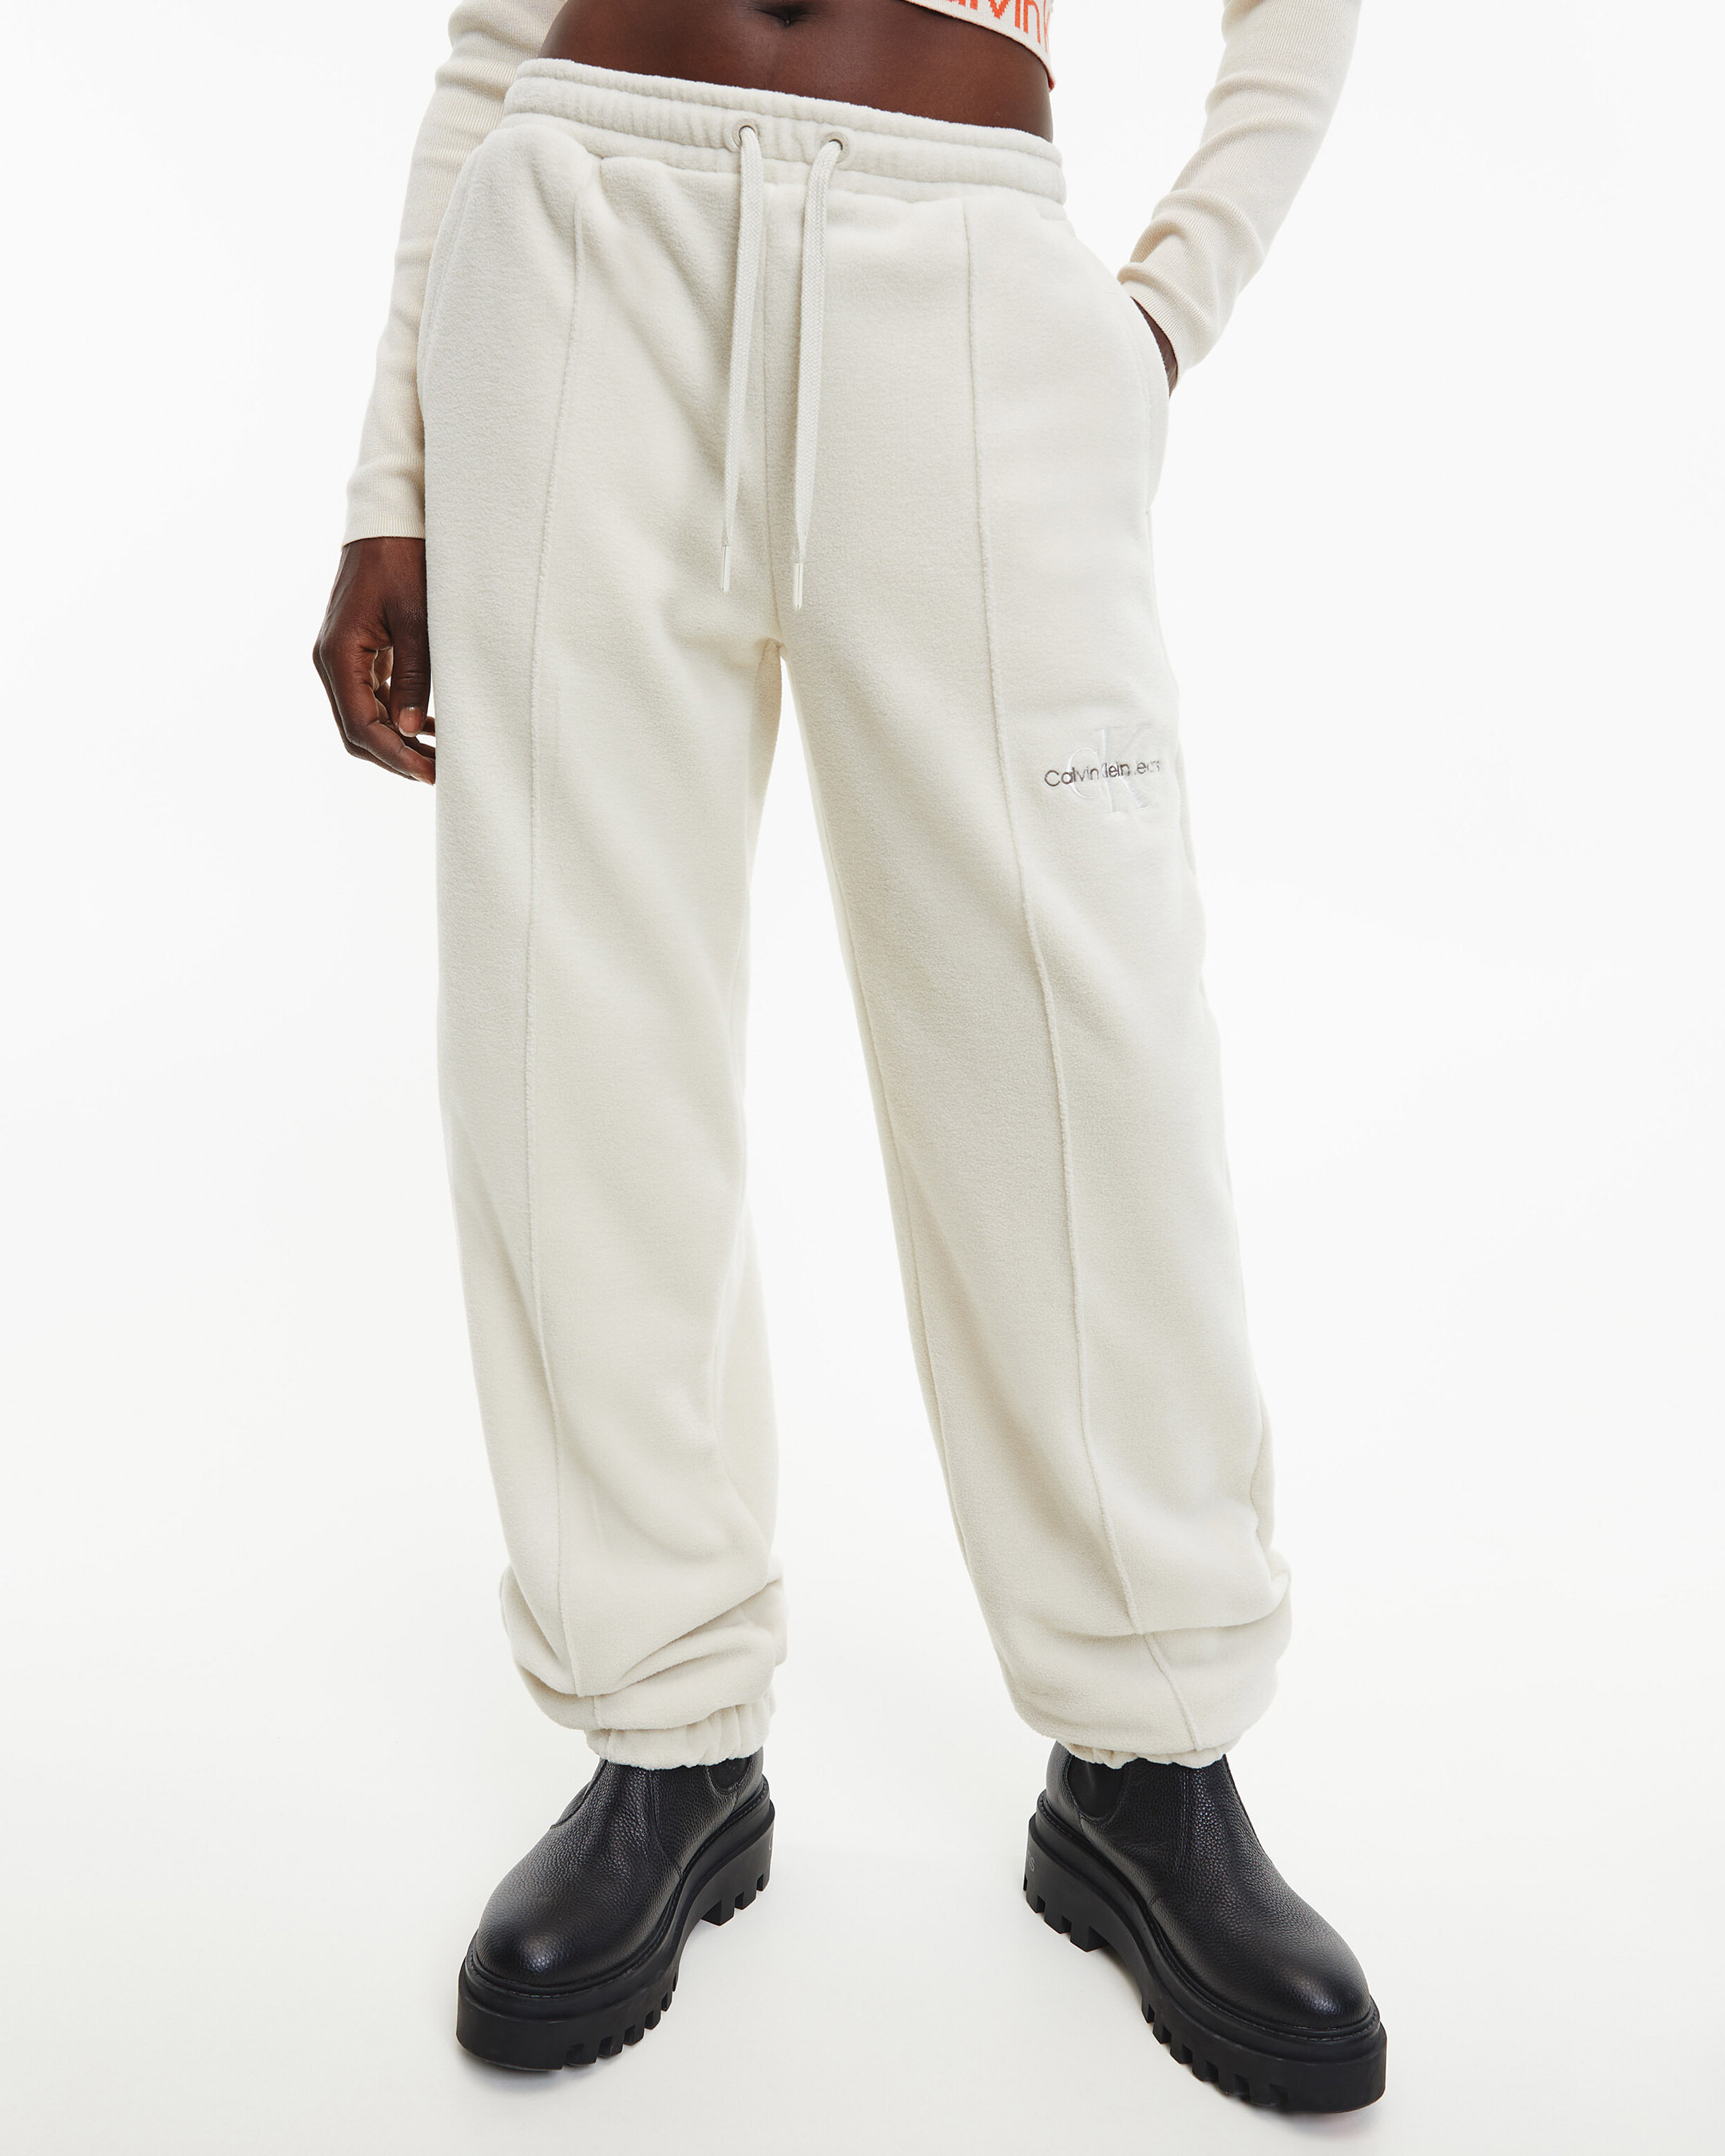 GUESS Originals Polar Fleece Jogger  Urban Outfitters Singapore Official  Site